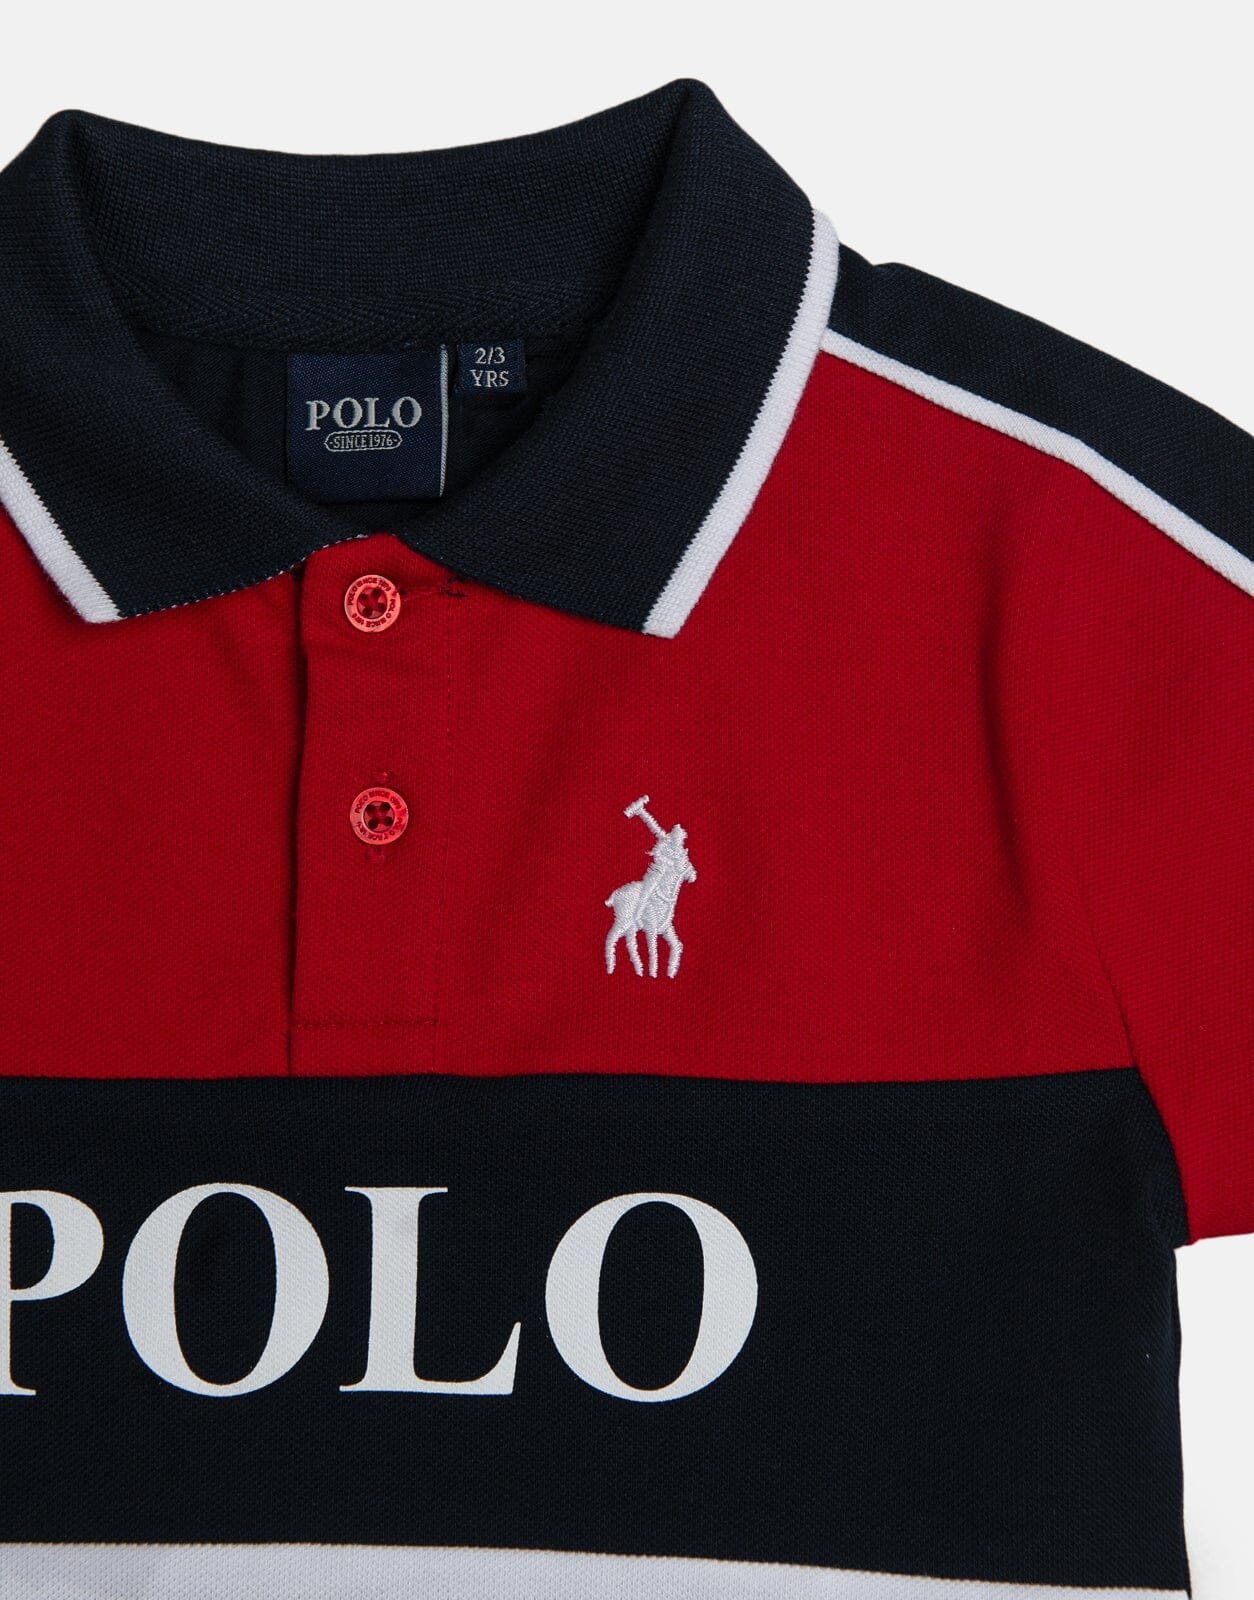 Polo Hawke Colourblock Polo Shirt - Subwear